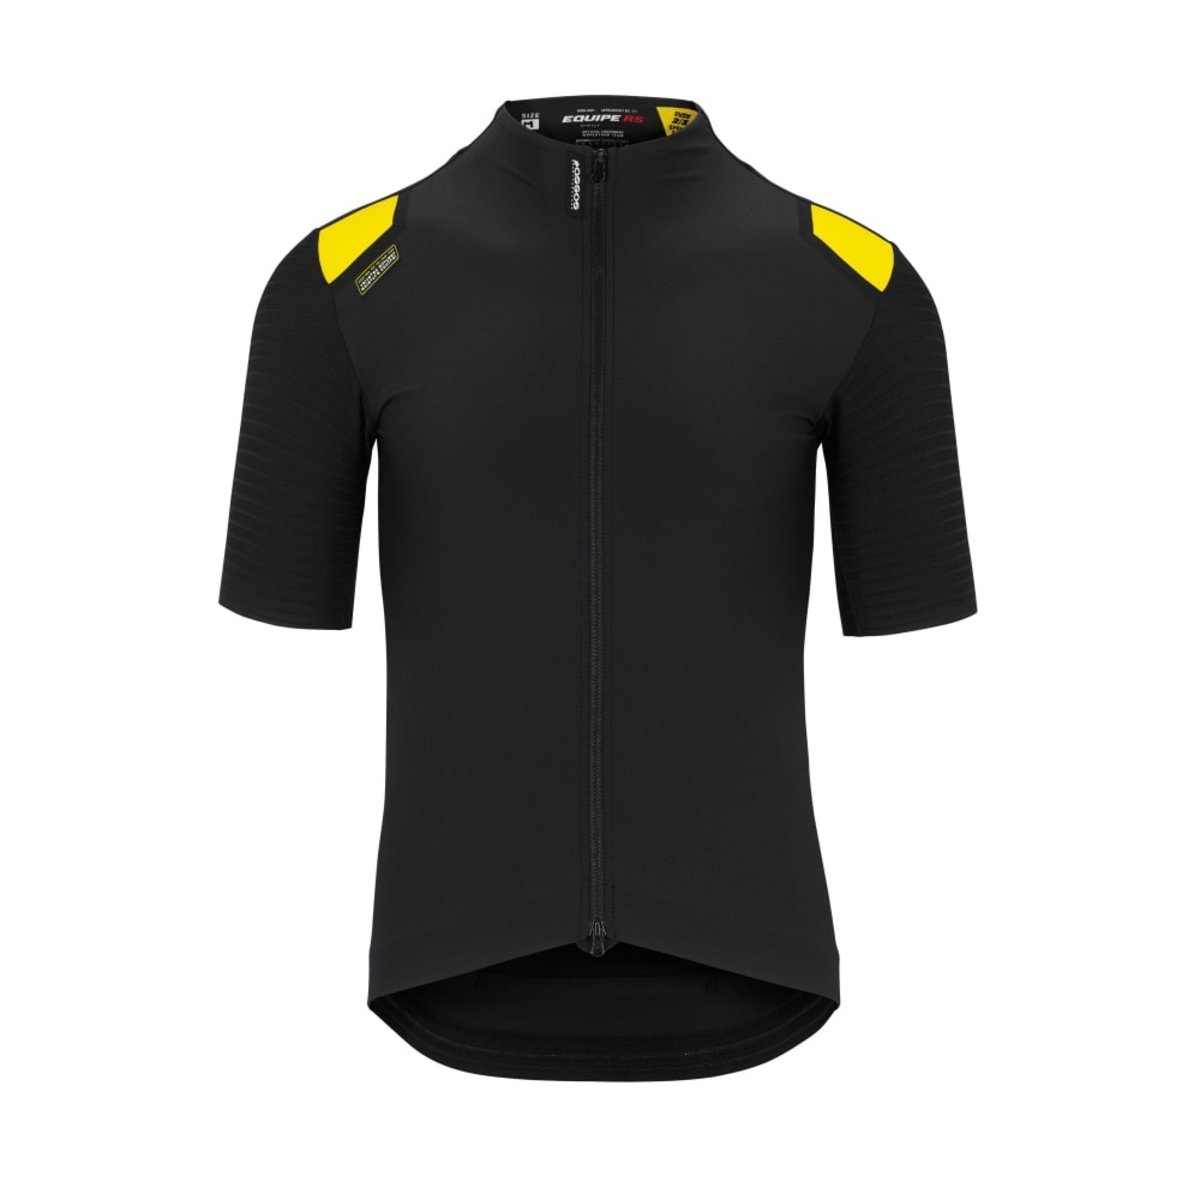 Джерси ASSOS Equipe RS Spring Fall Aero SS Jersey Black Series, кор. рукав, мужское, черное с желтым, M фото 1